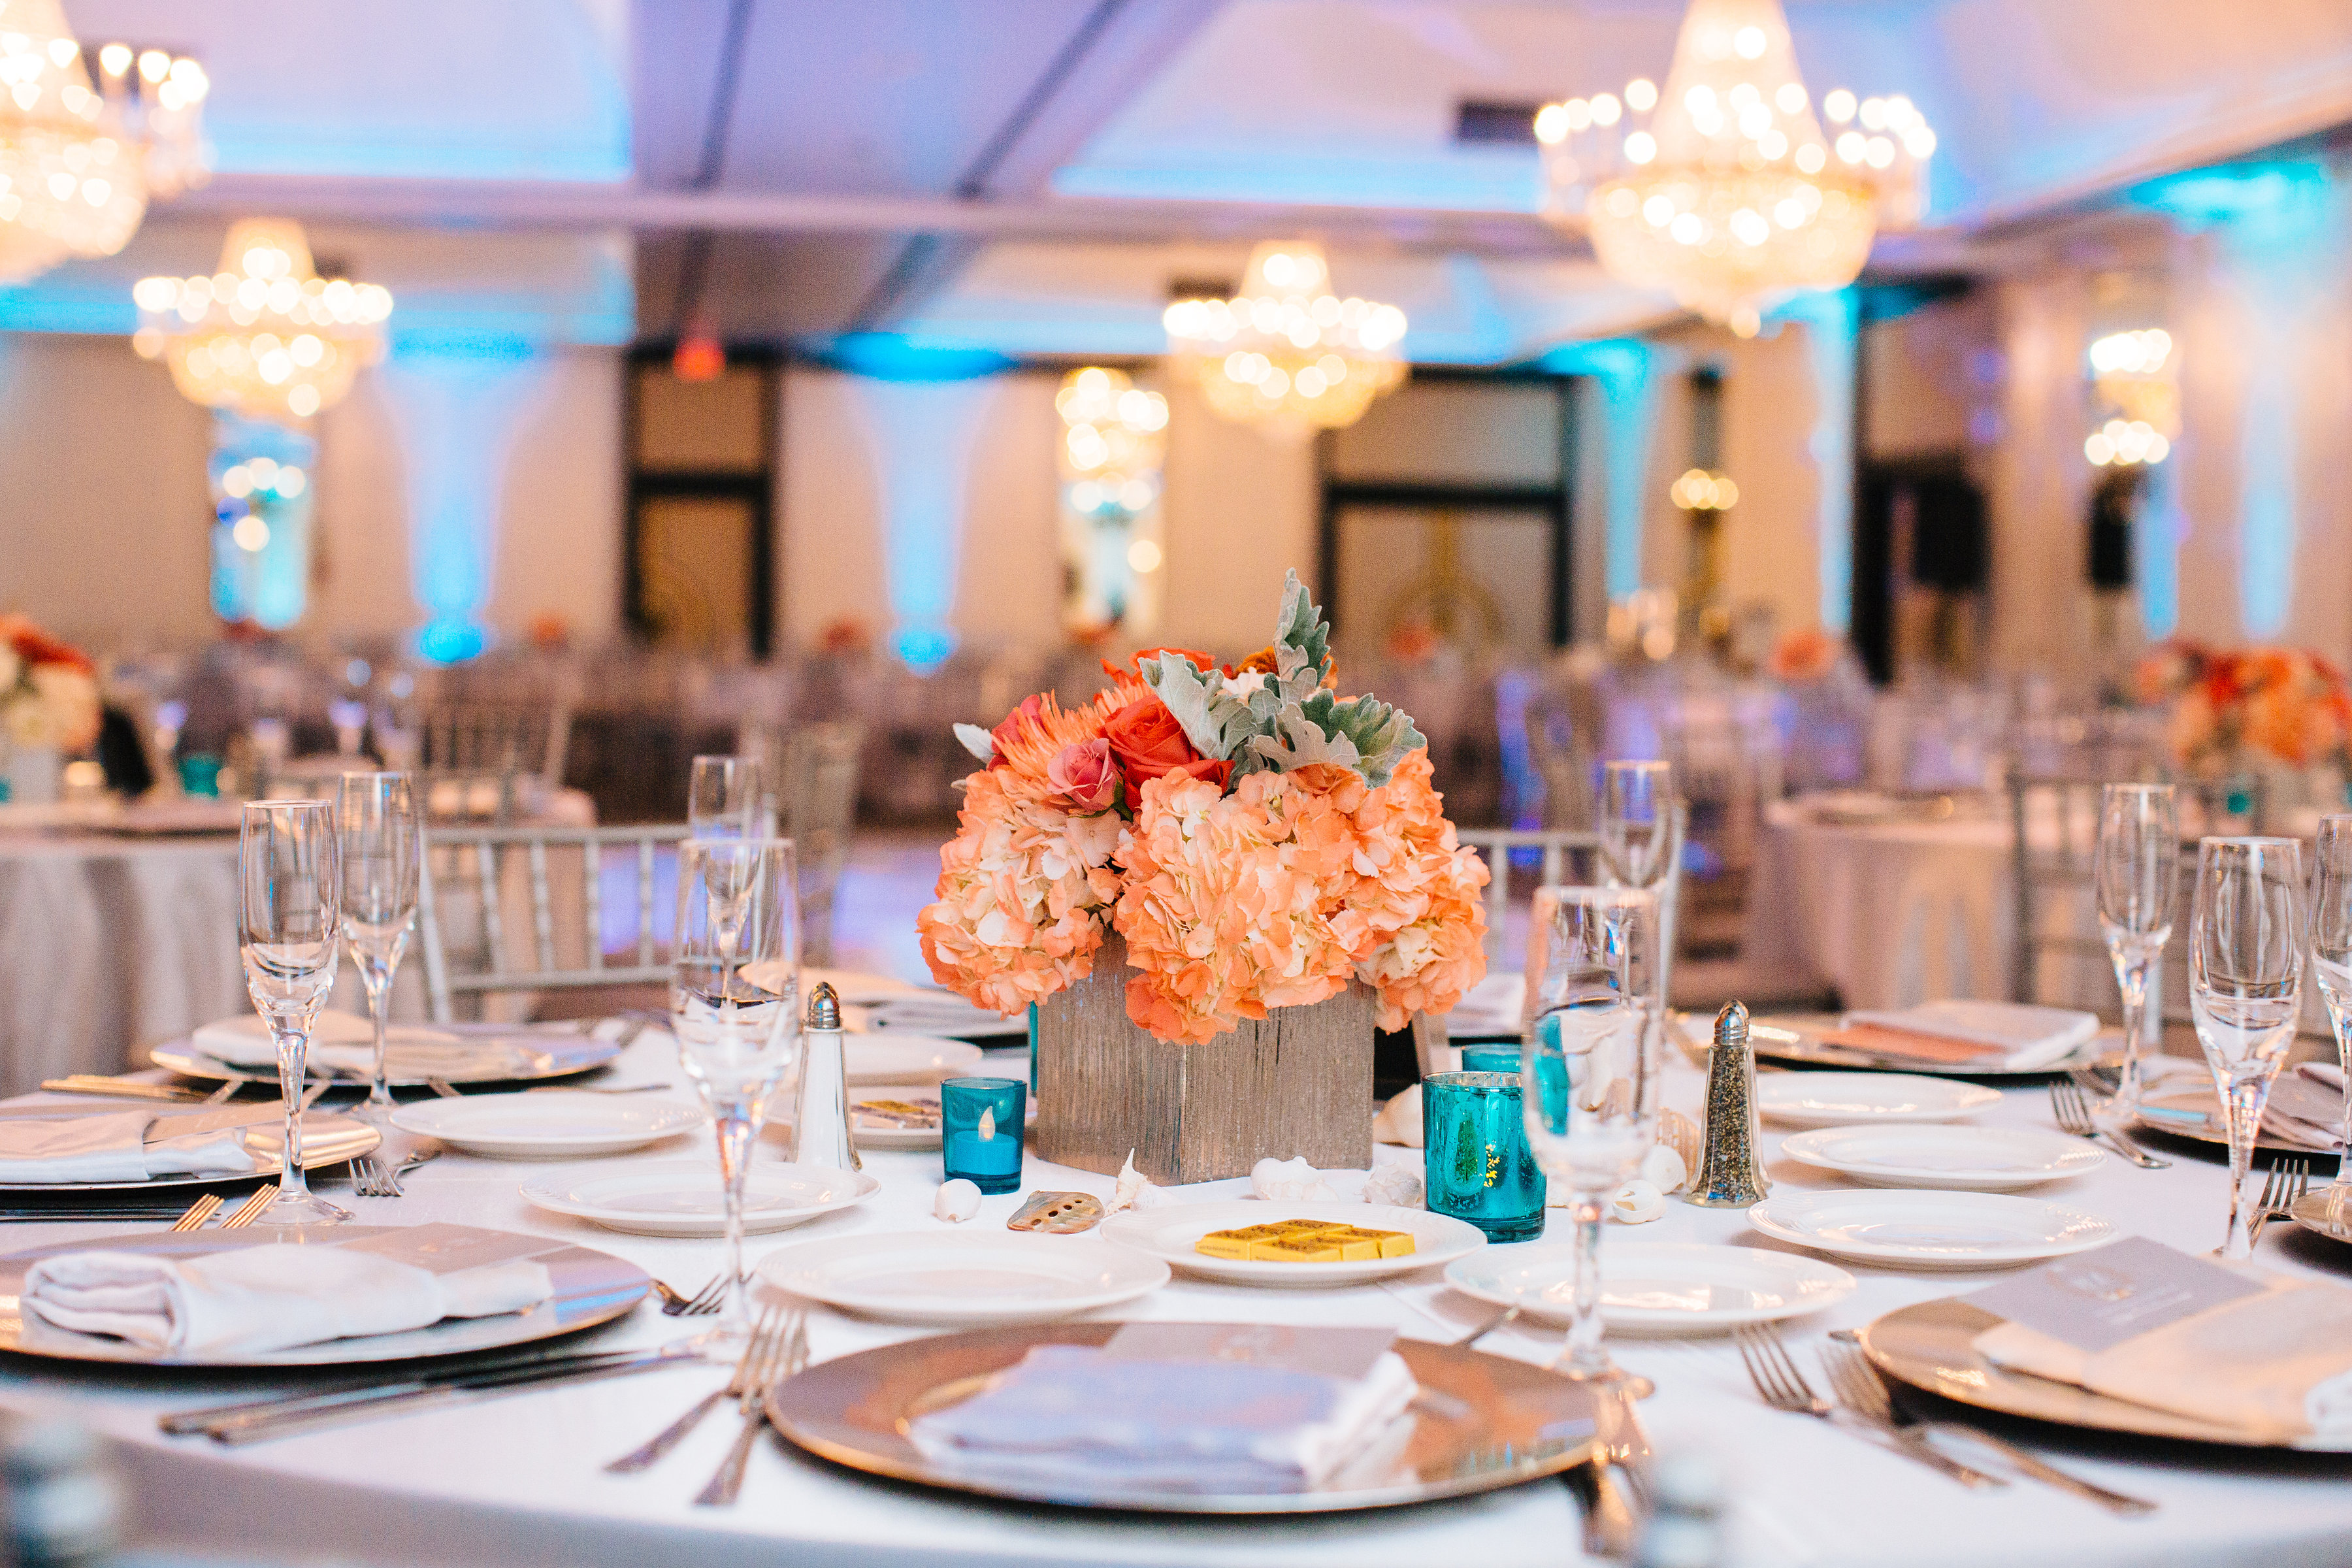 event tablescape with a peach colored floral arrangement